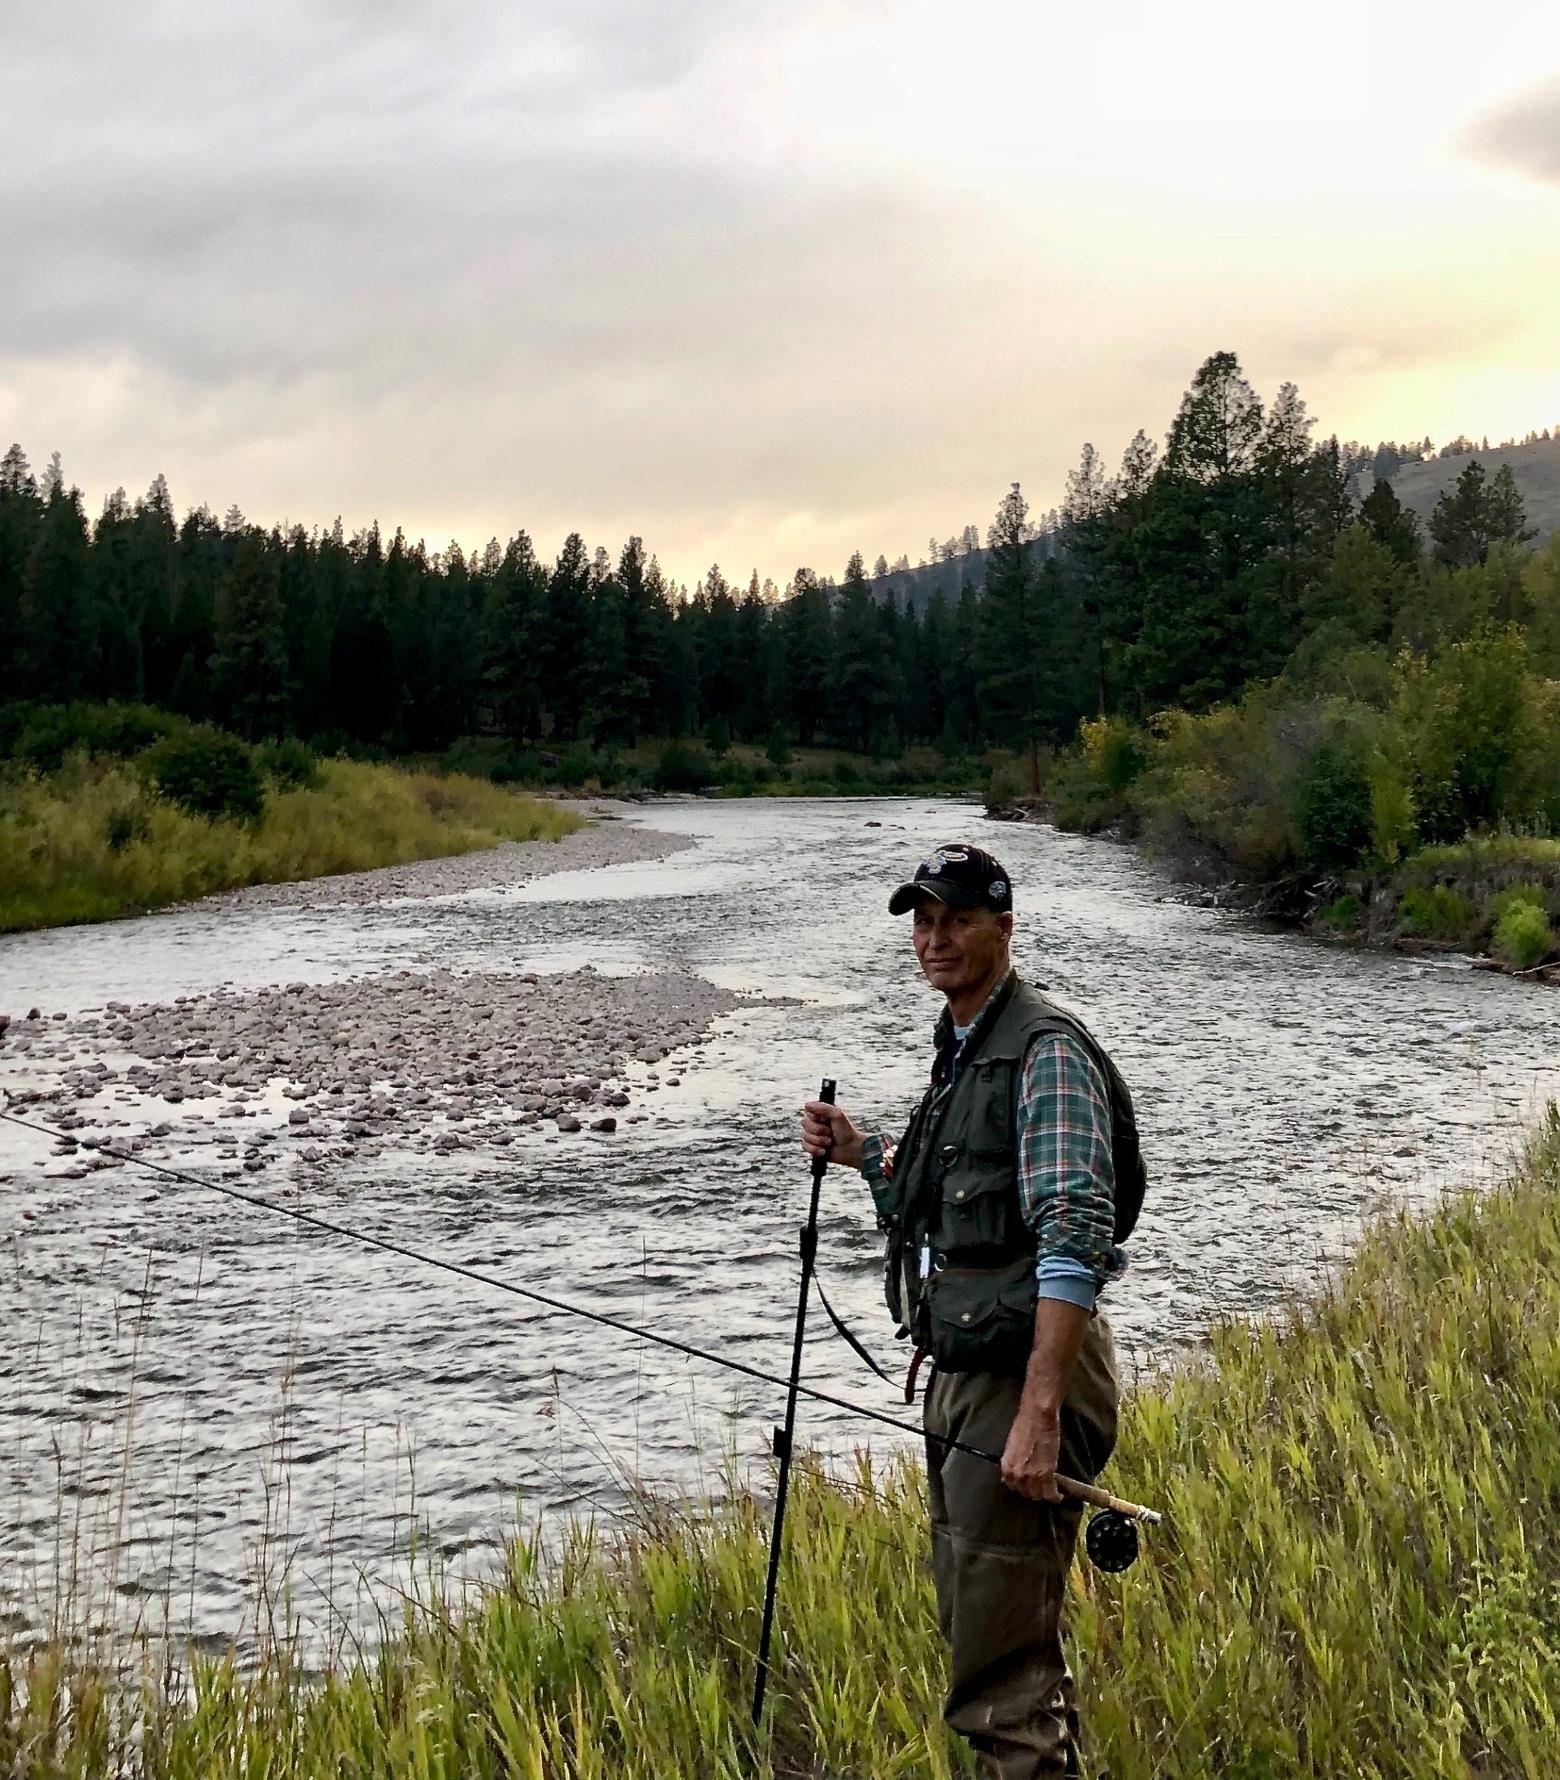 Maclean, in his element, fishing the home waters in Montana. Photo courtesy John N. Maclean